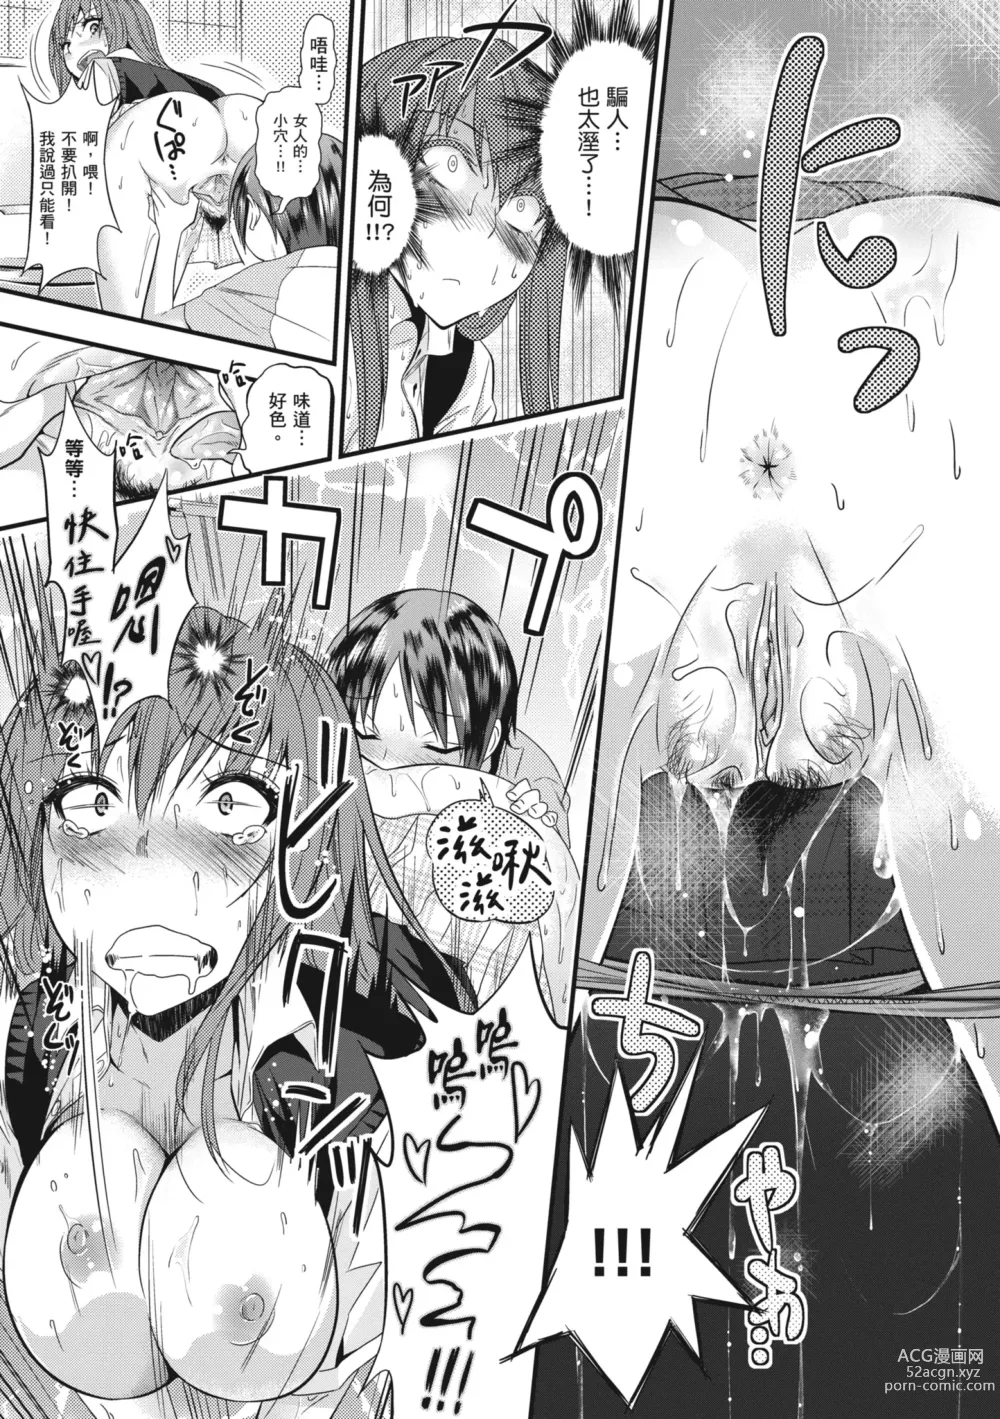 Page 301 of manga Fxxk Street Girls (decensored)